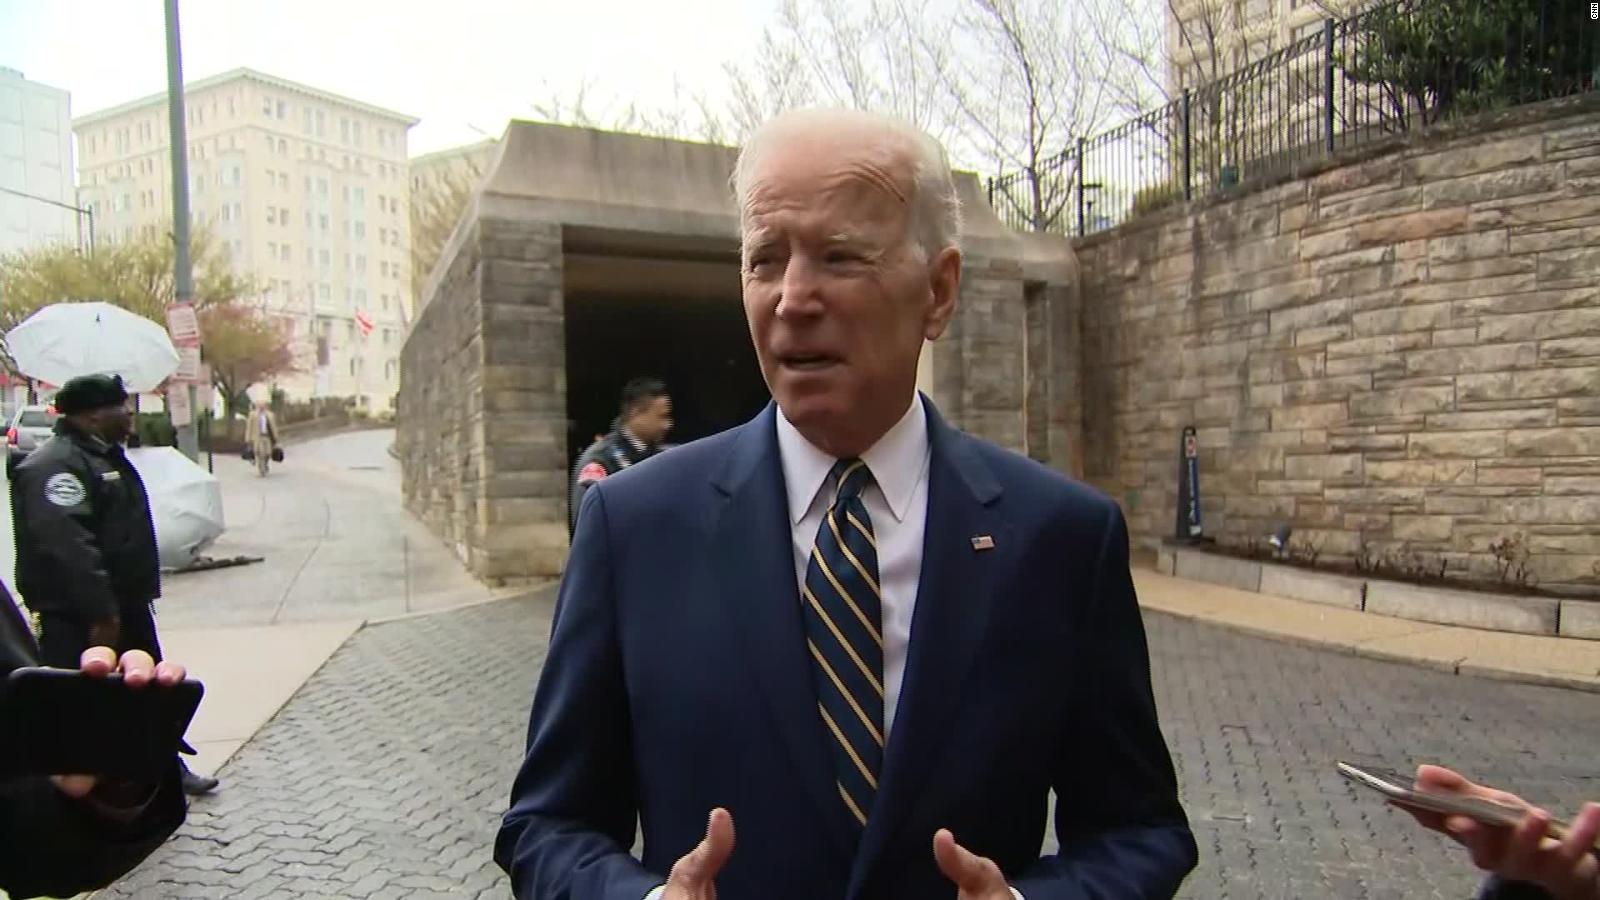 Joe Biden's handling of Anita Hill hearing re-emerges with latest  controversy - CNNPolitics